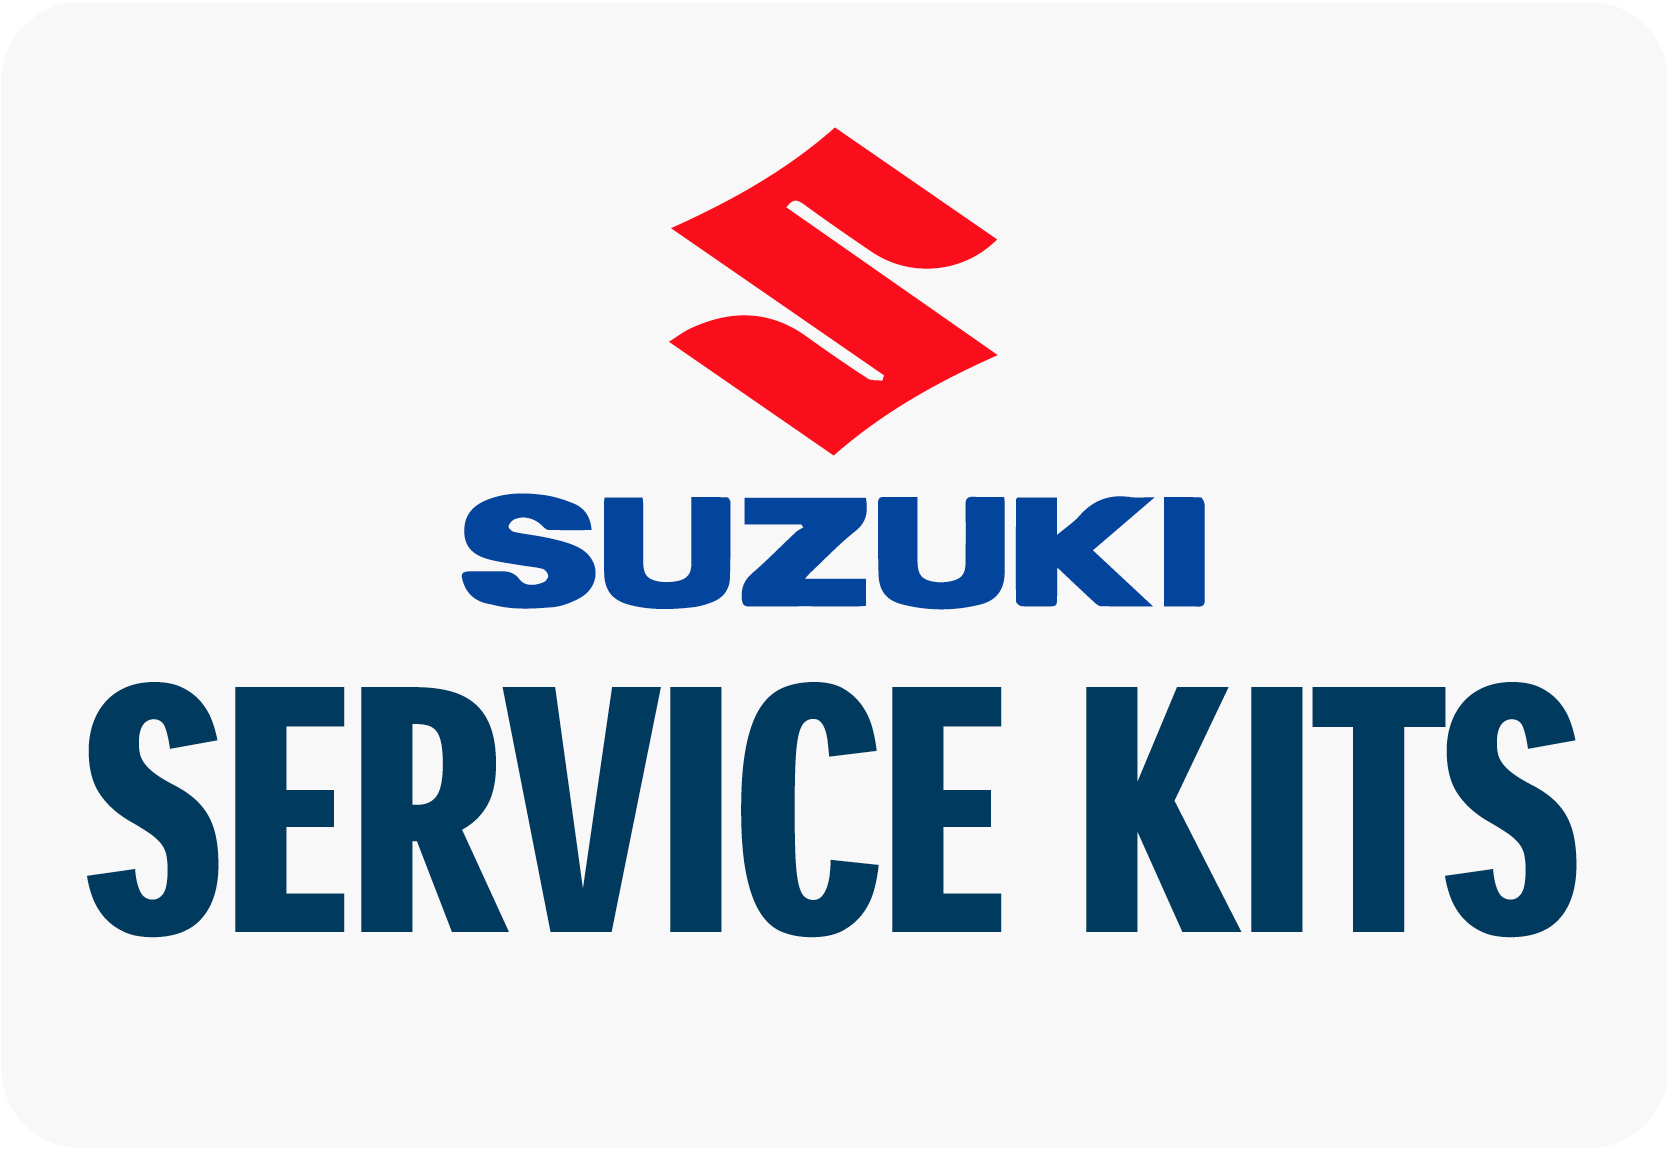 Suzuki Celerio Service Kits